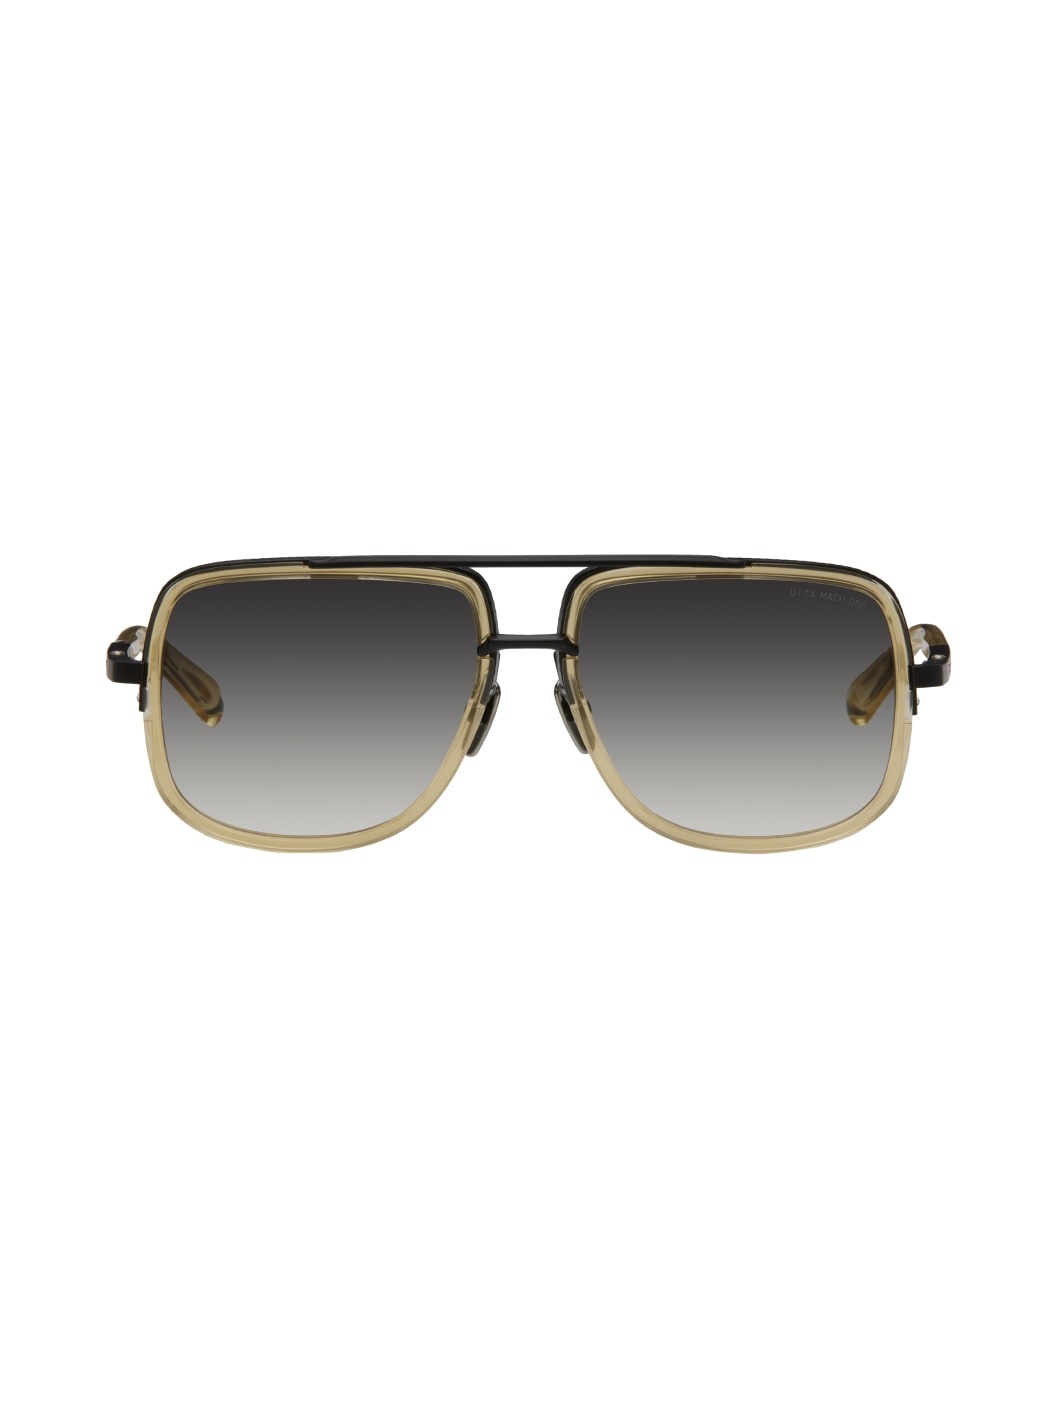 Black & Gold Mach-One Sunglasses - 1